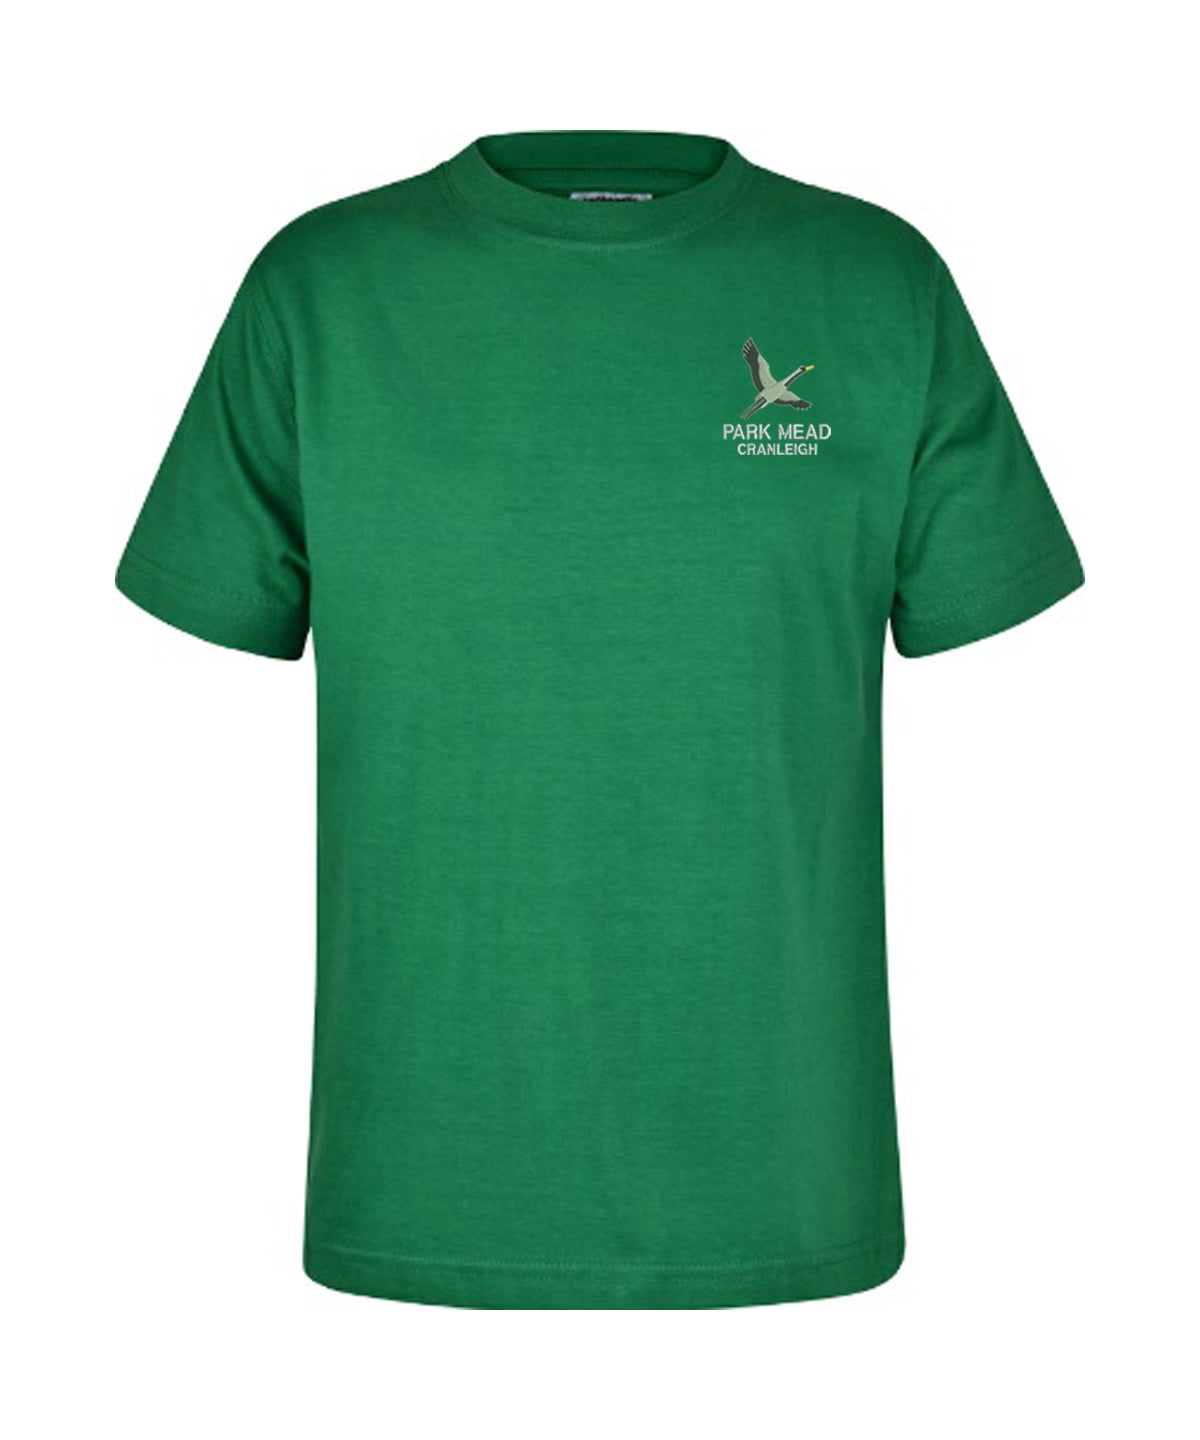 Park Mead Primary School - Unisex Cotton T Shirt - Emerald